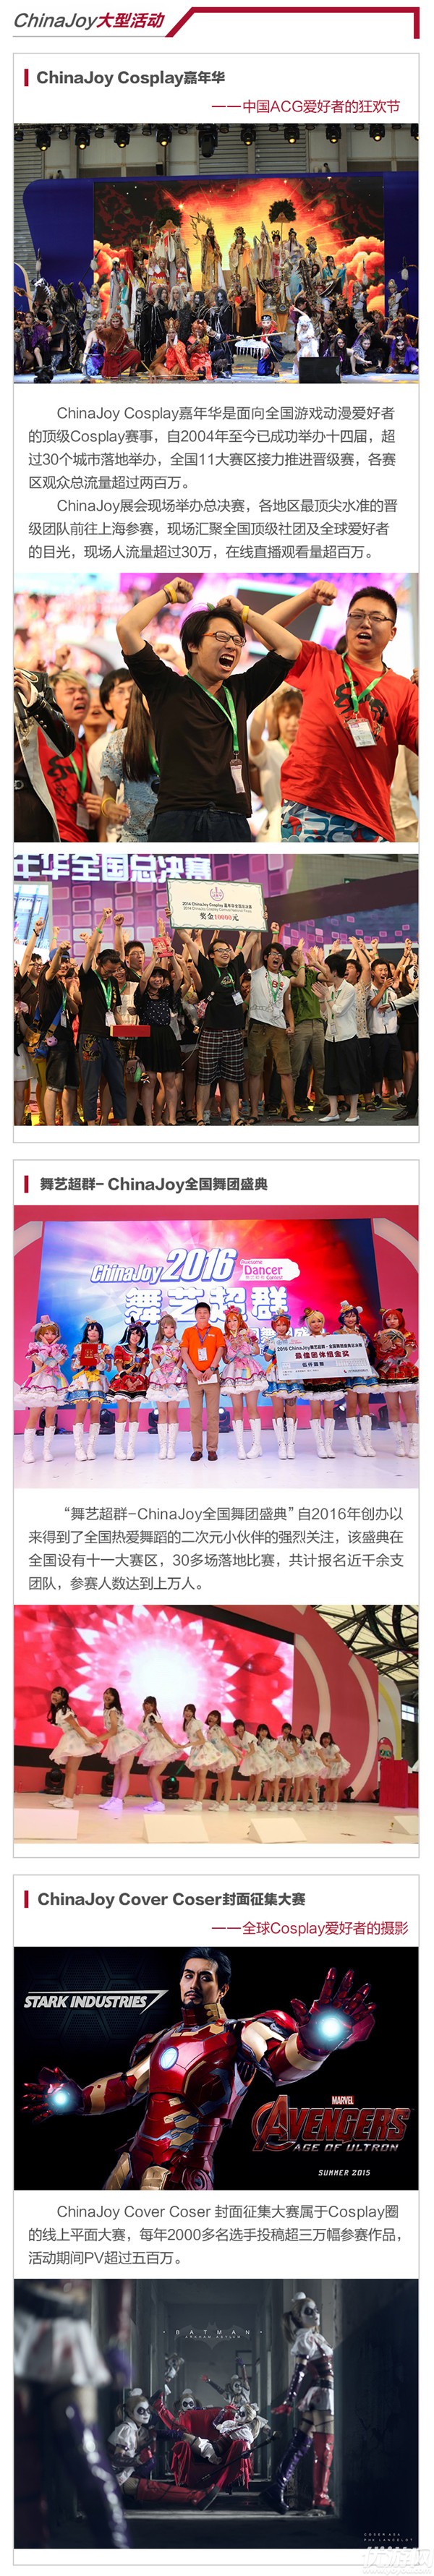 Chinajoy BTOC展台日程表正式公布